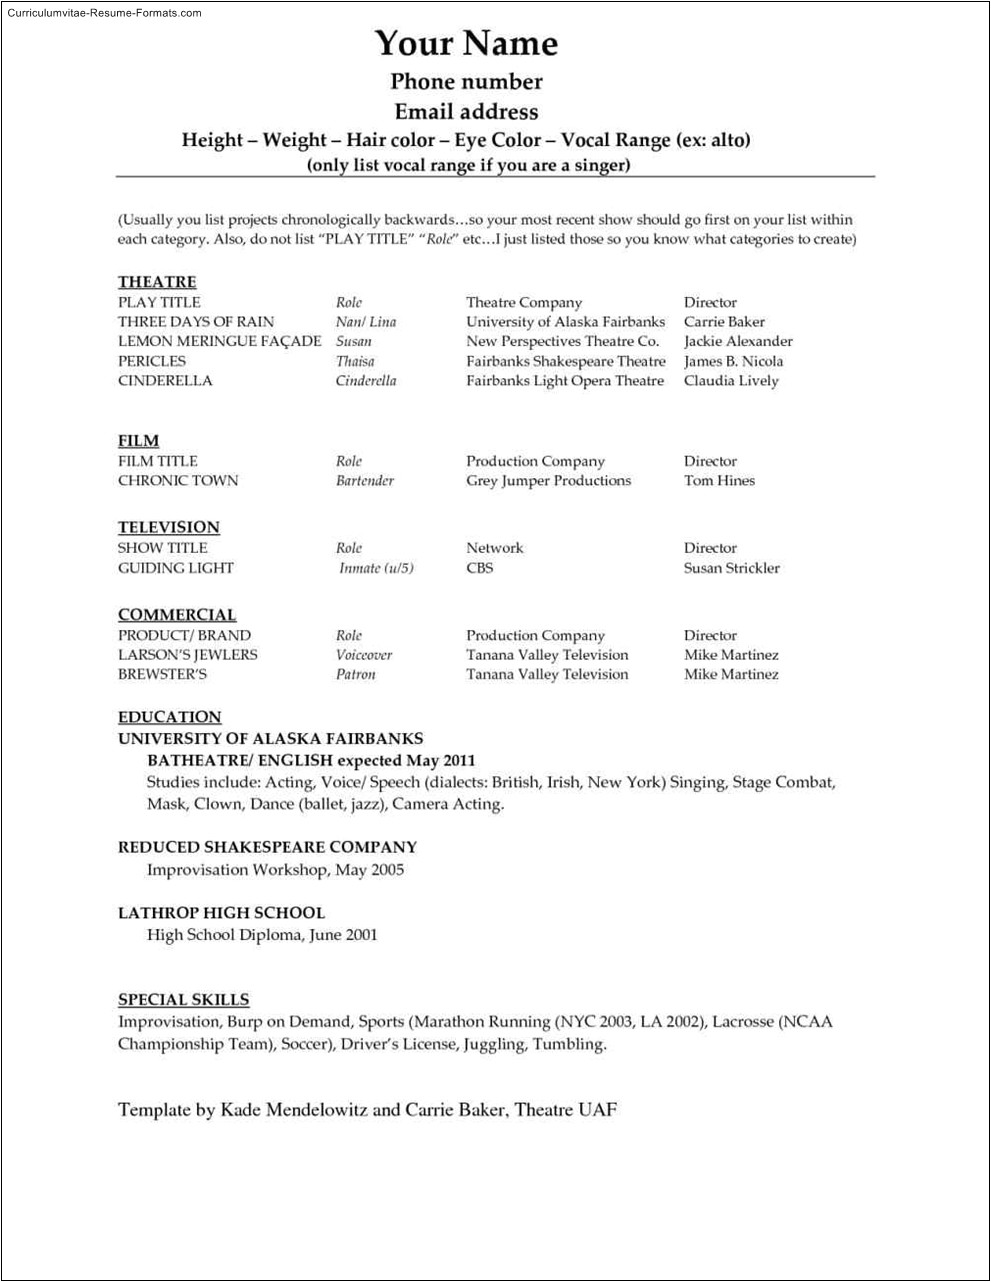 microsoft word 2010 resume template